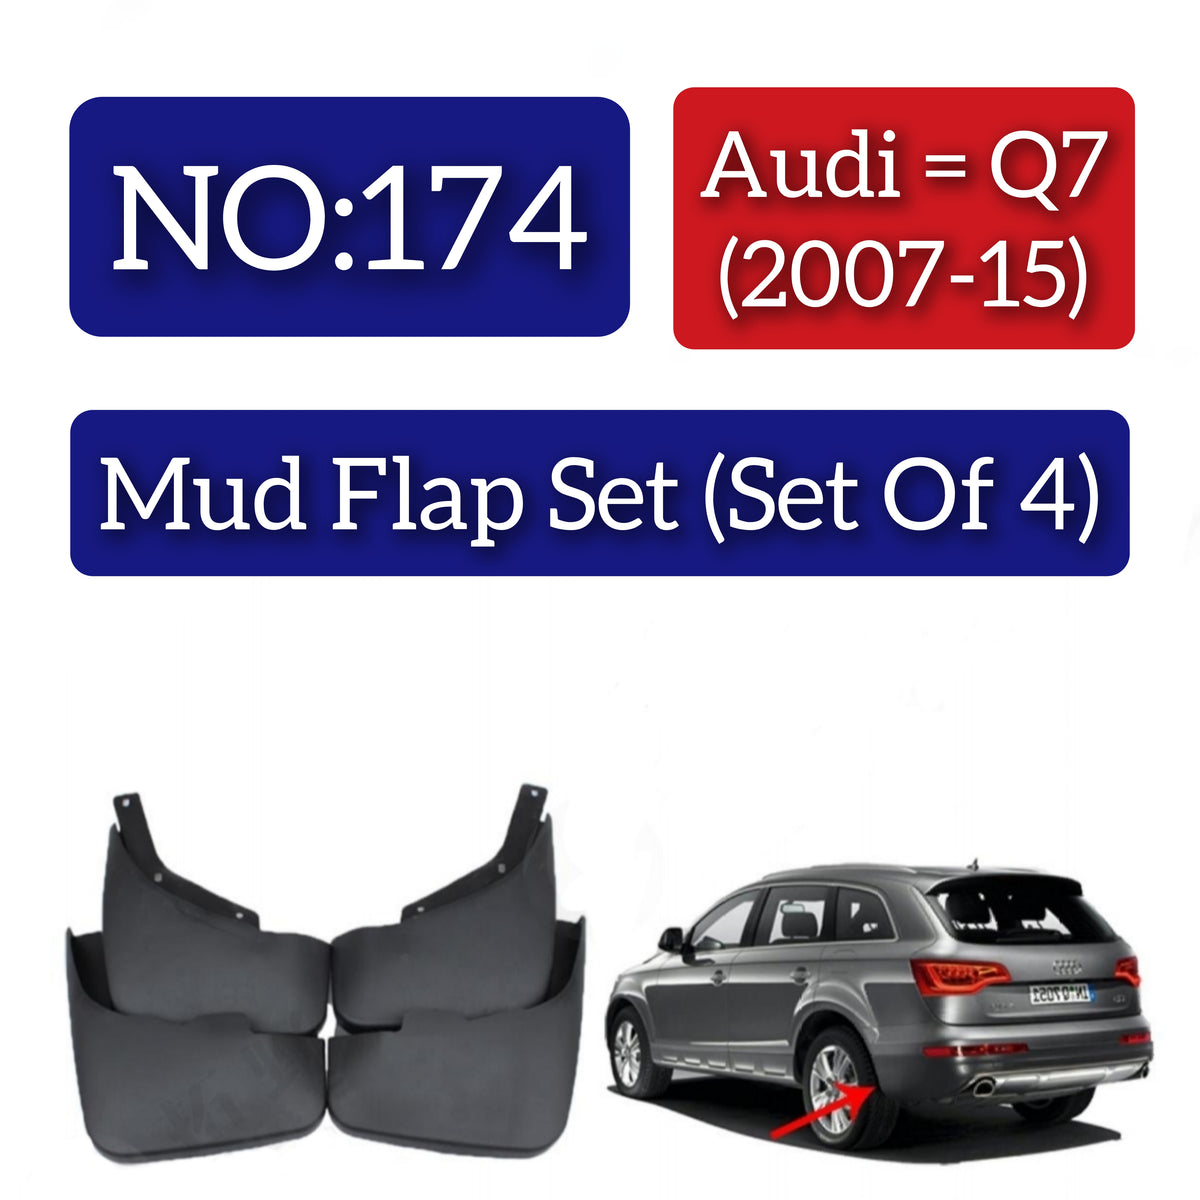 Audi Q7 (2007-15) Mud Flap Set (Set of 4) Tag 174